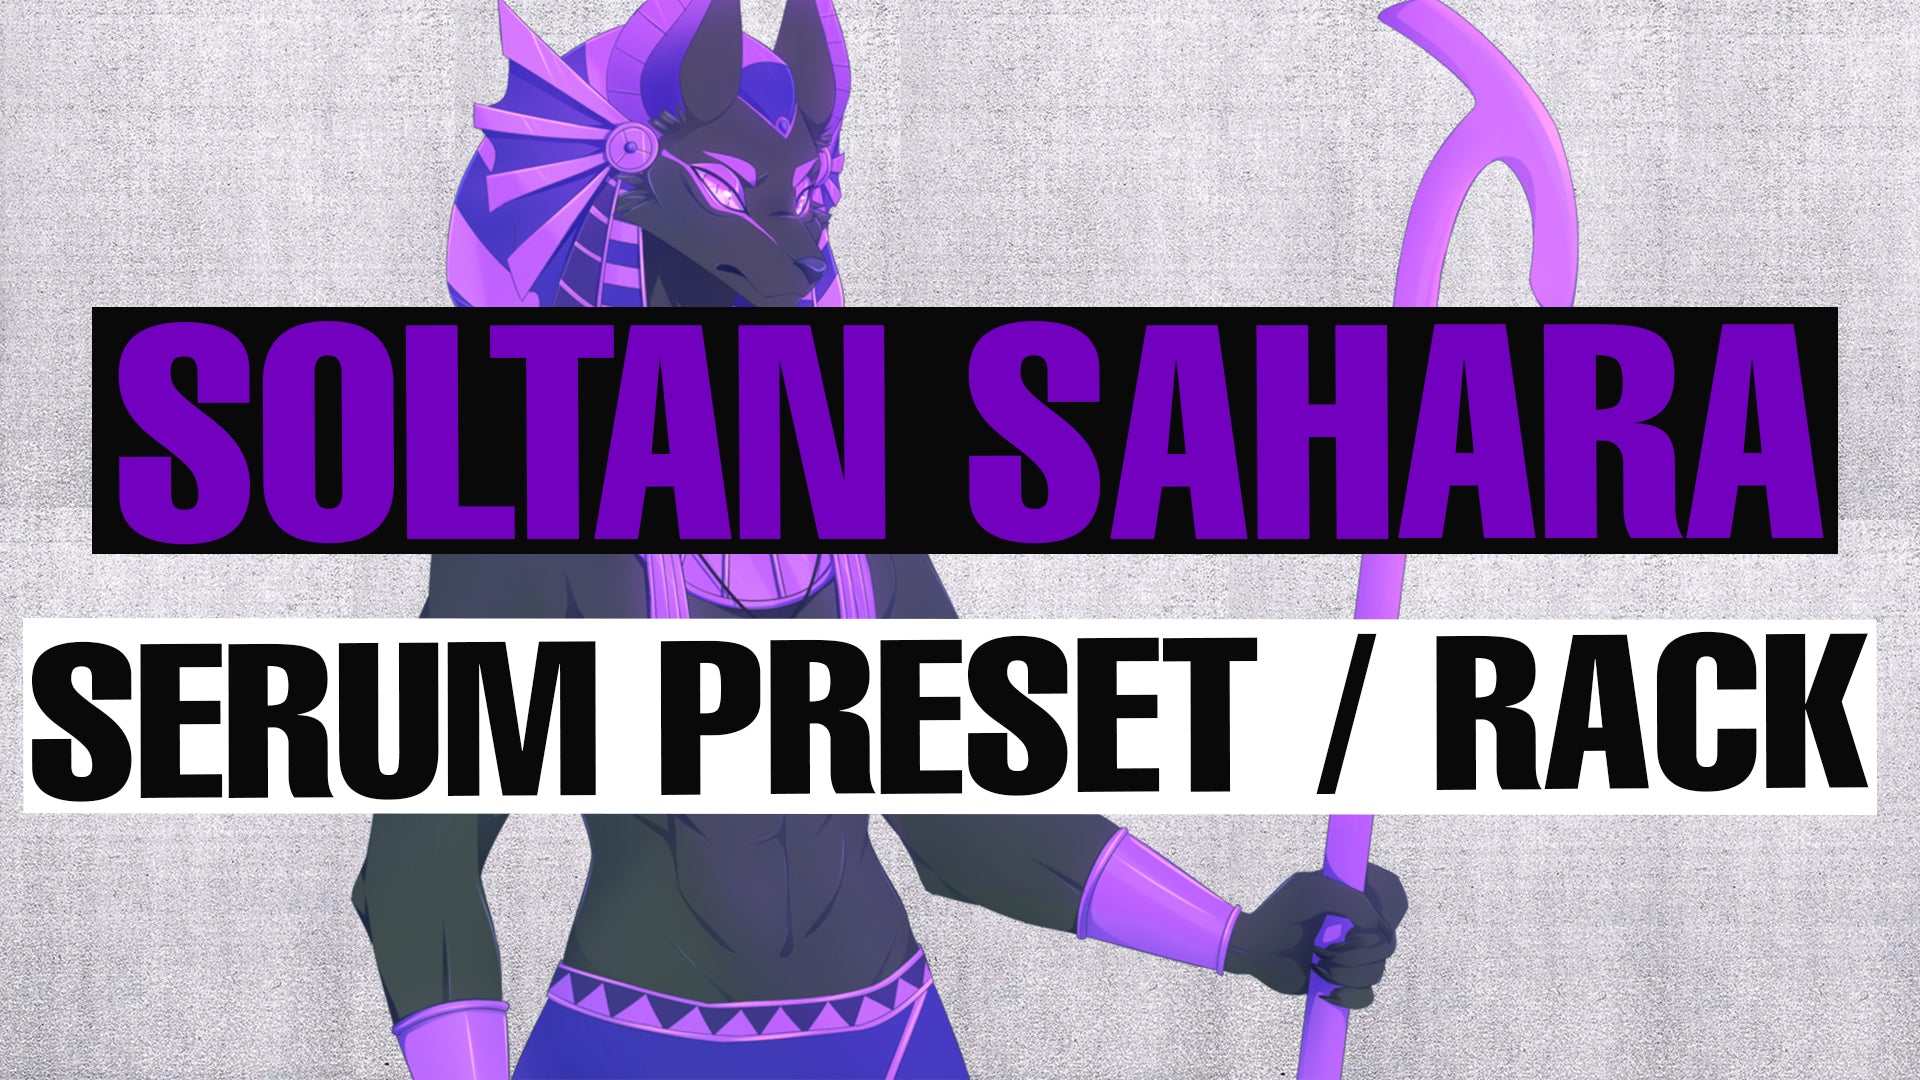 Soltan - Sahara Serum Preset / Ableton FX Rack